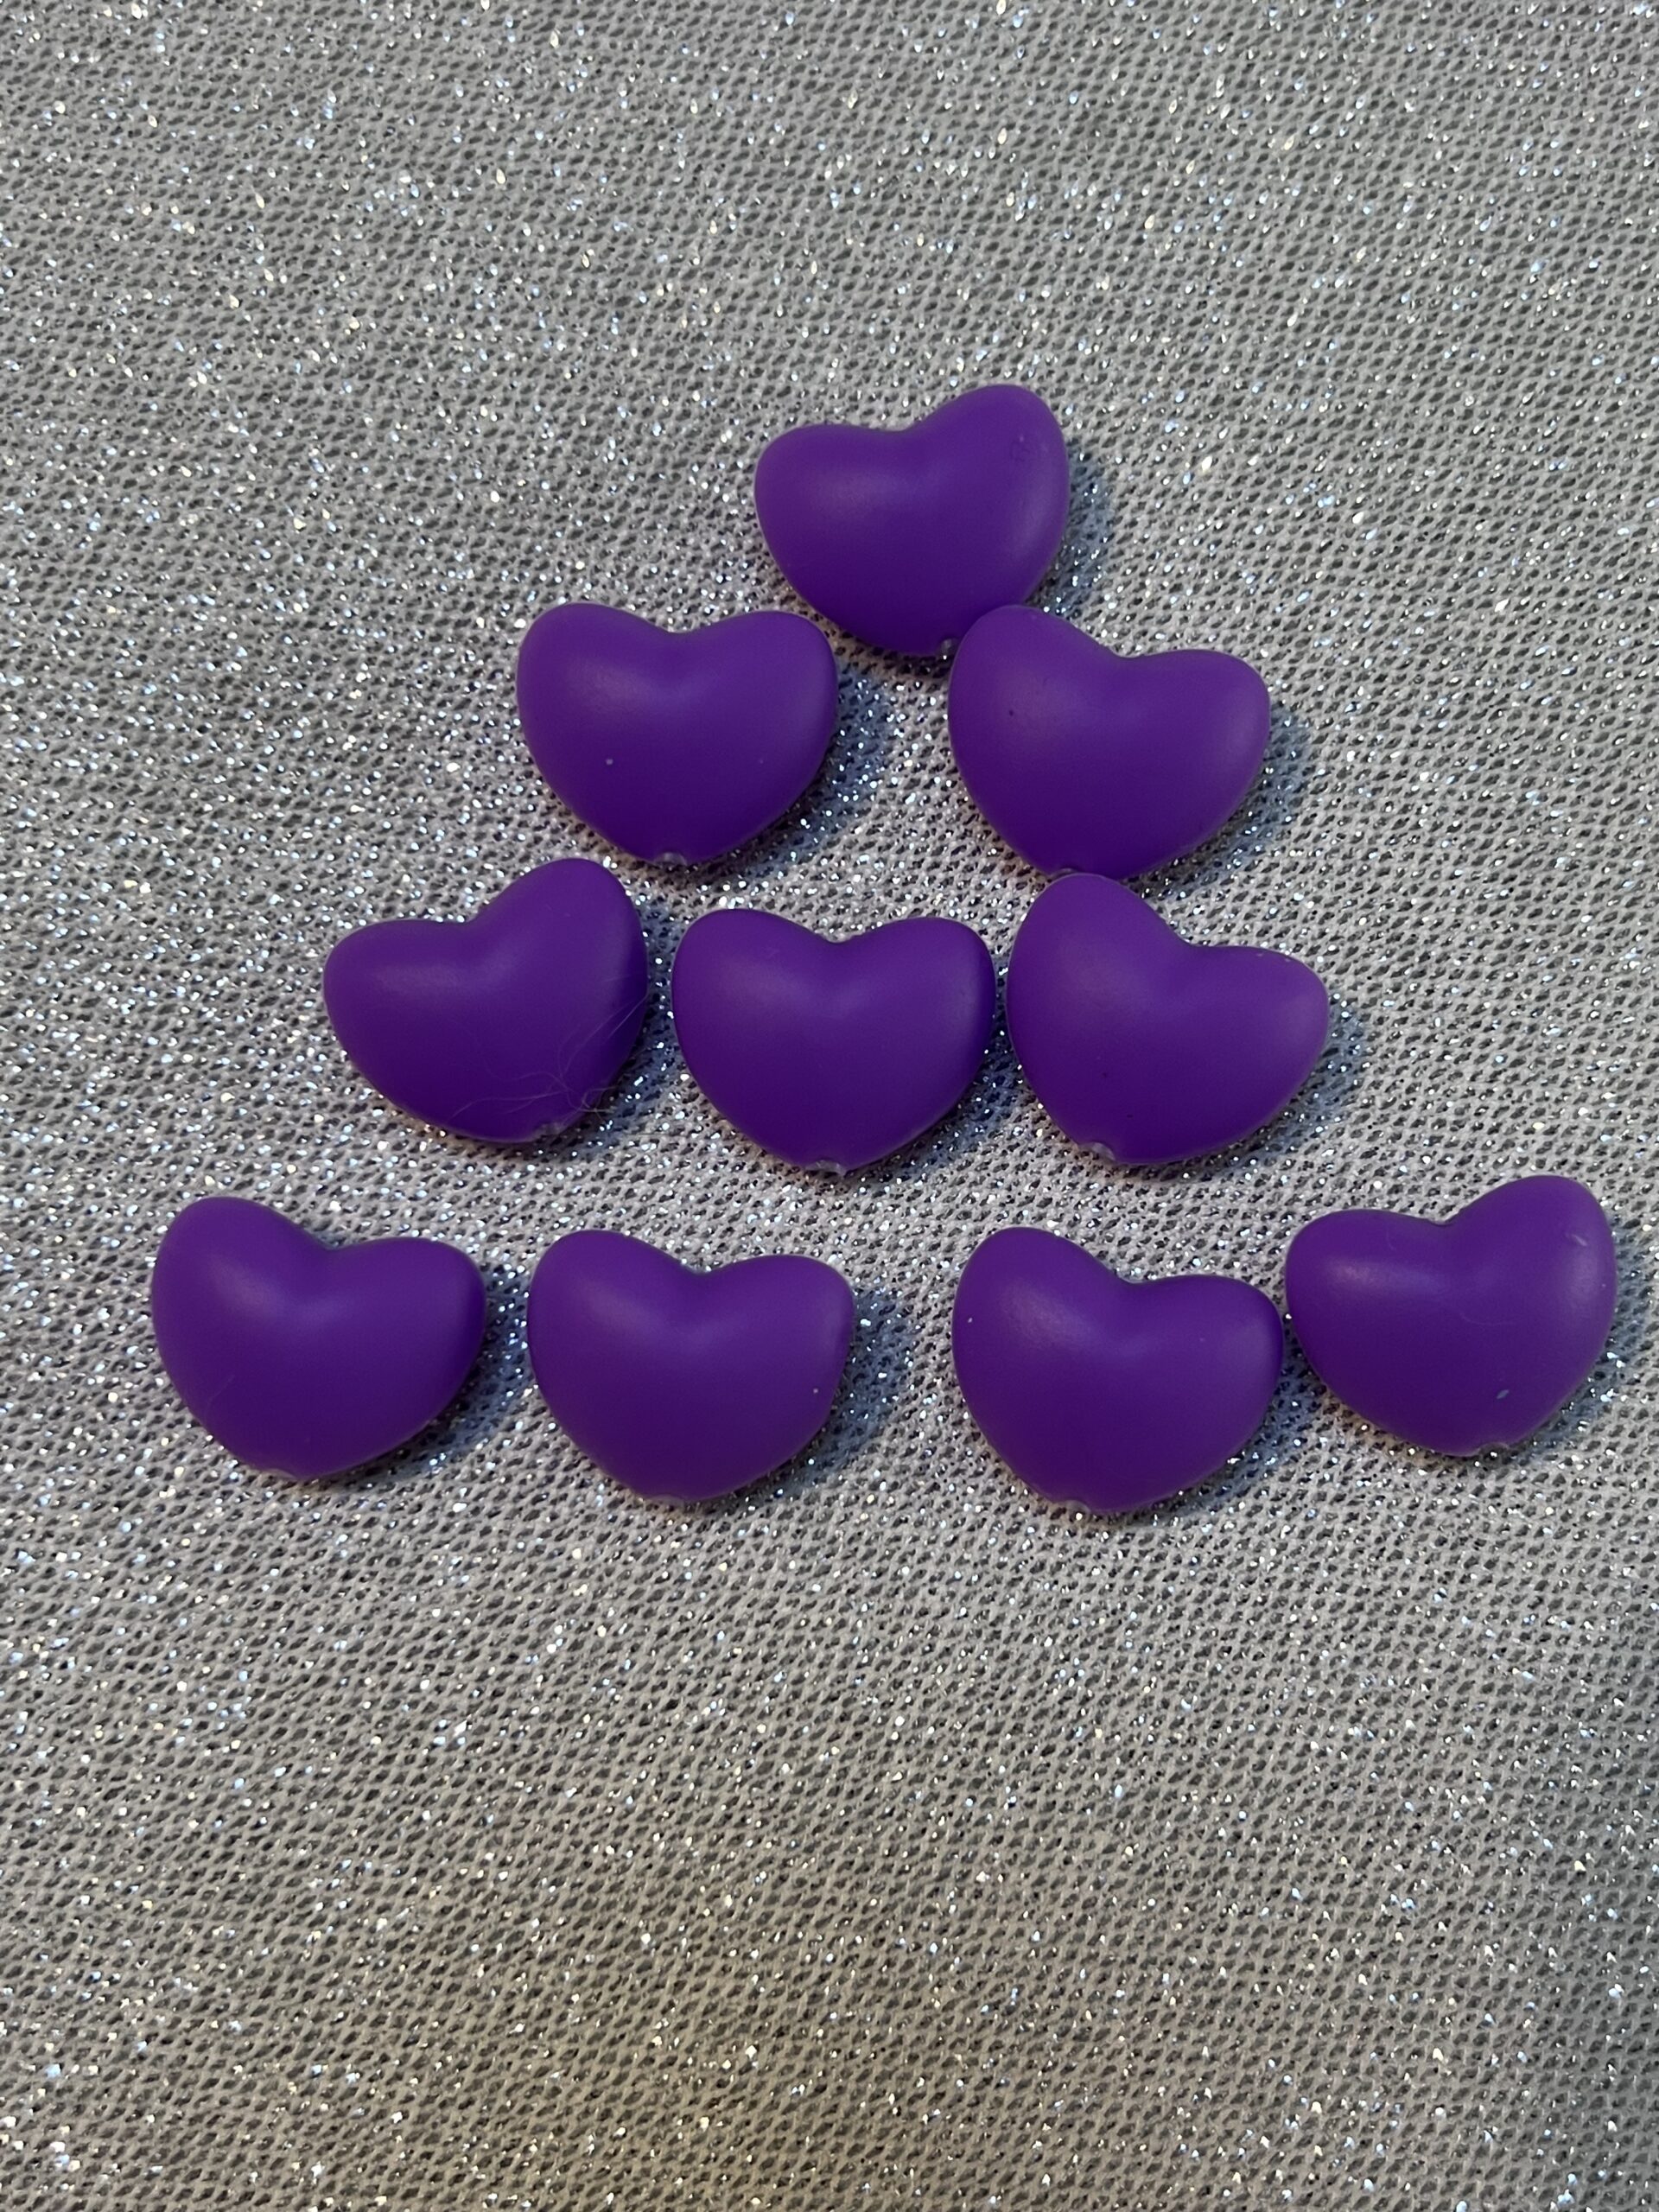 Silicone Big Purple Heart Beads, Heart Shaped beads